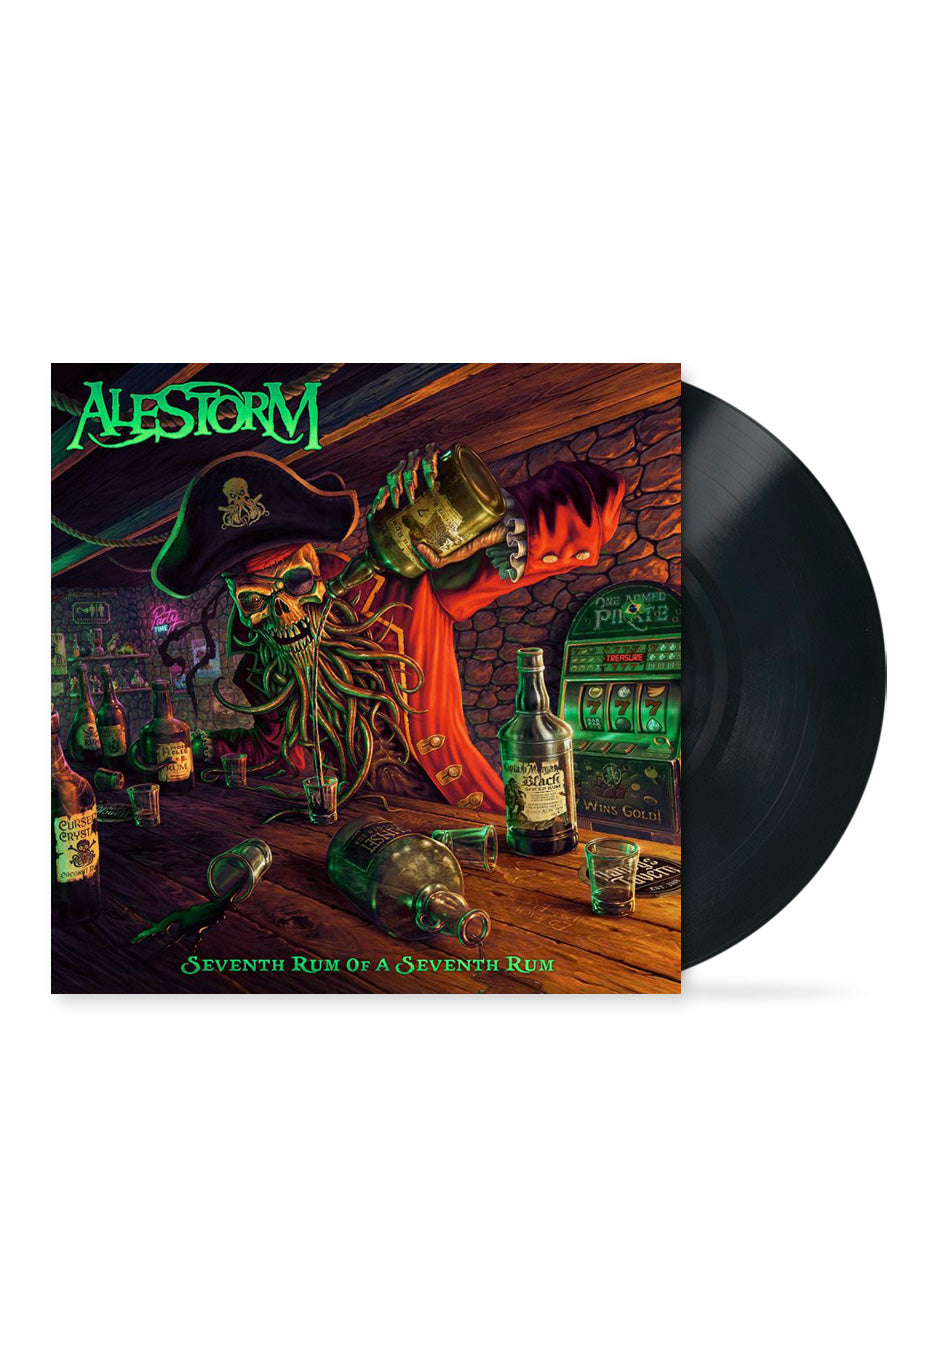 Alestorm - Seventh Rum Of The Seventh Rum - Vinyl